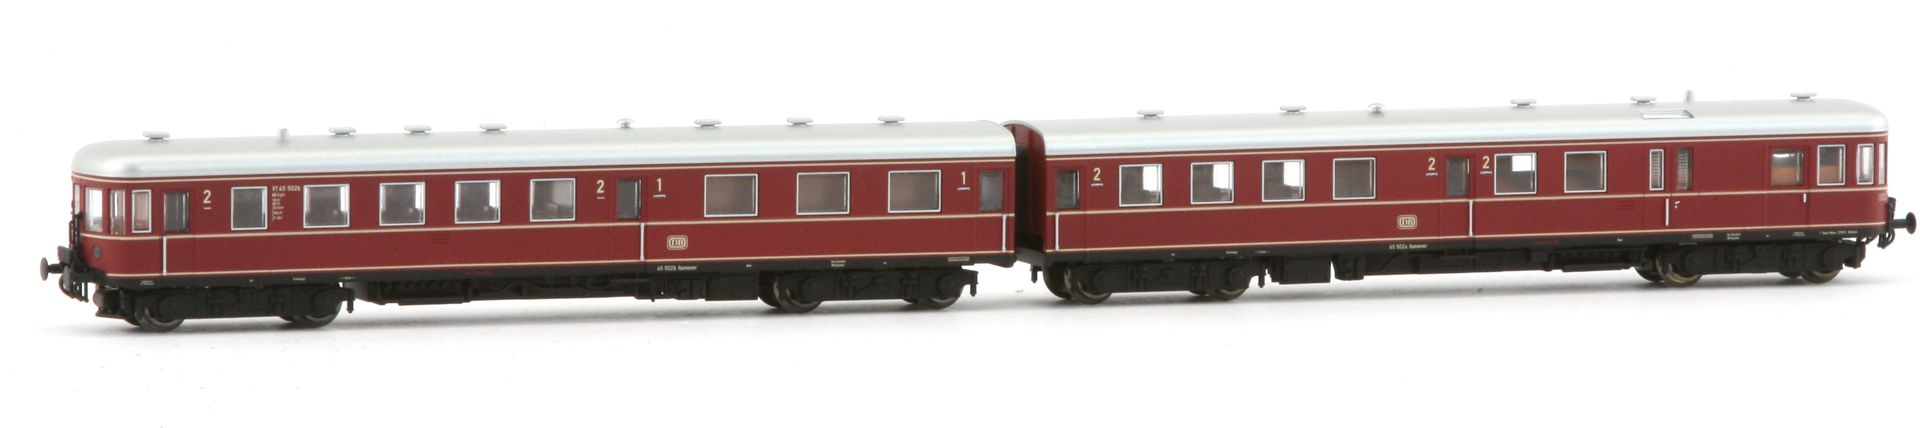 Kres 51040020 - Triebzug VT 45 'Stettin', 45 502a/b, DB, Ep.III, 2-teilig